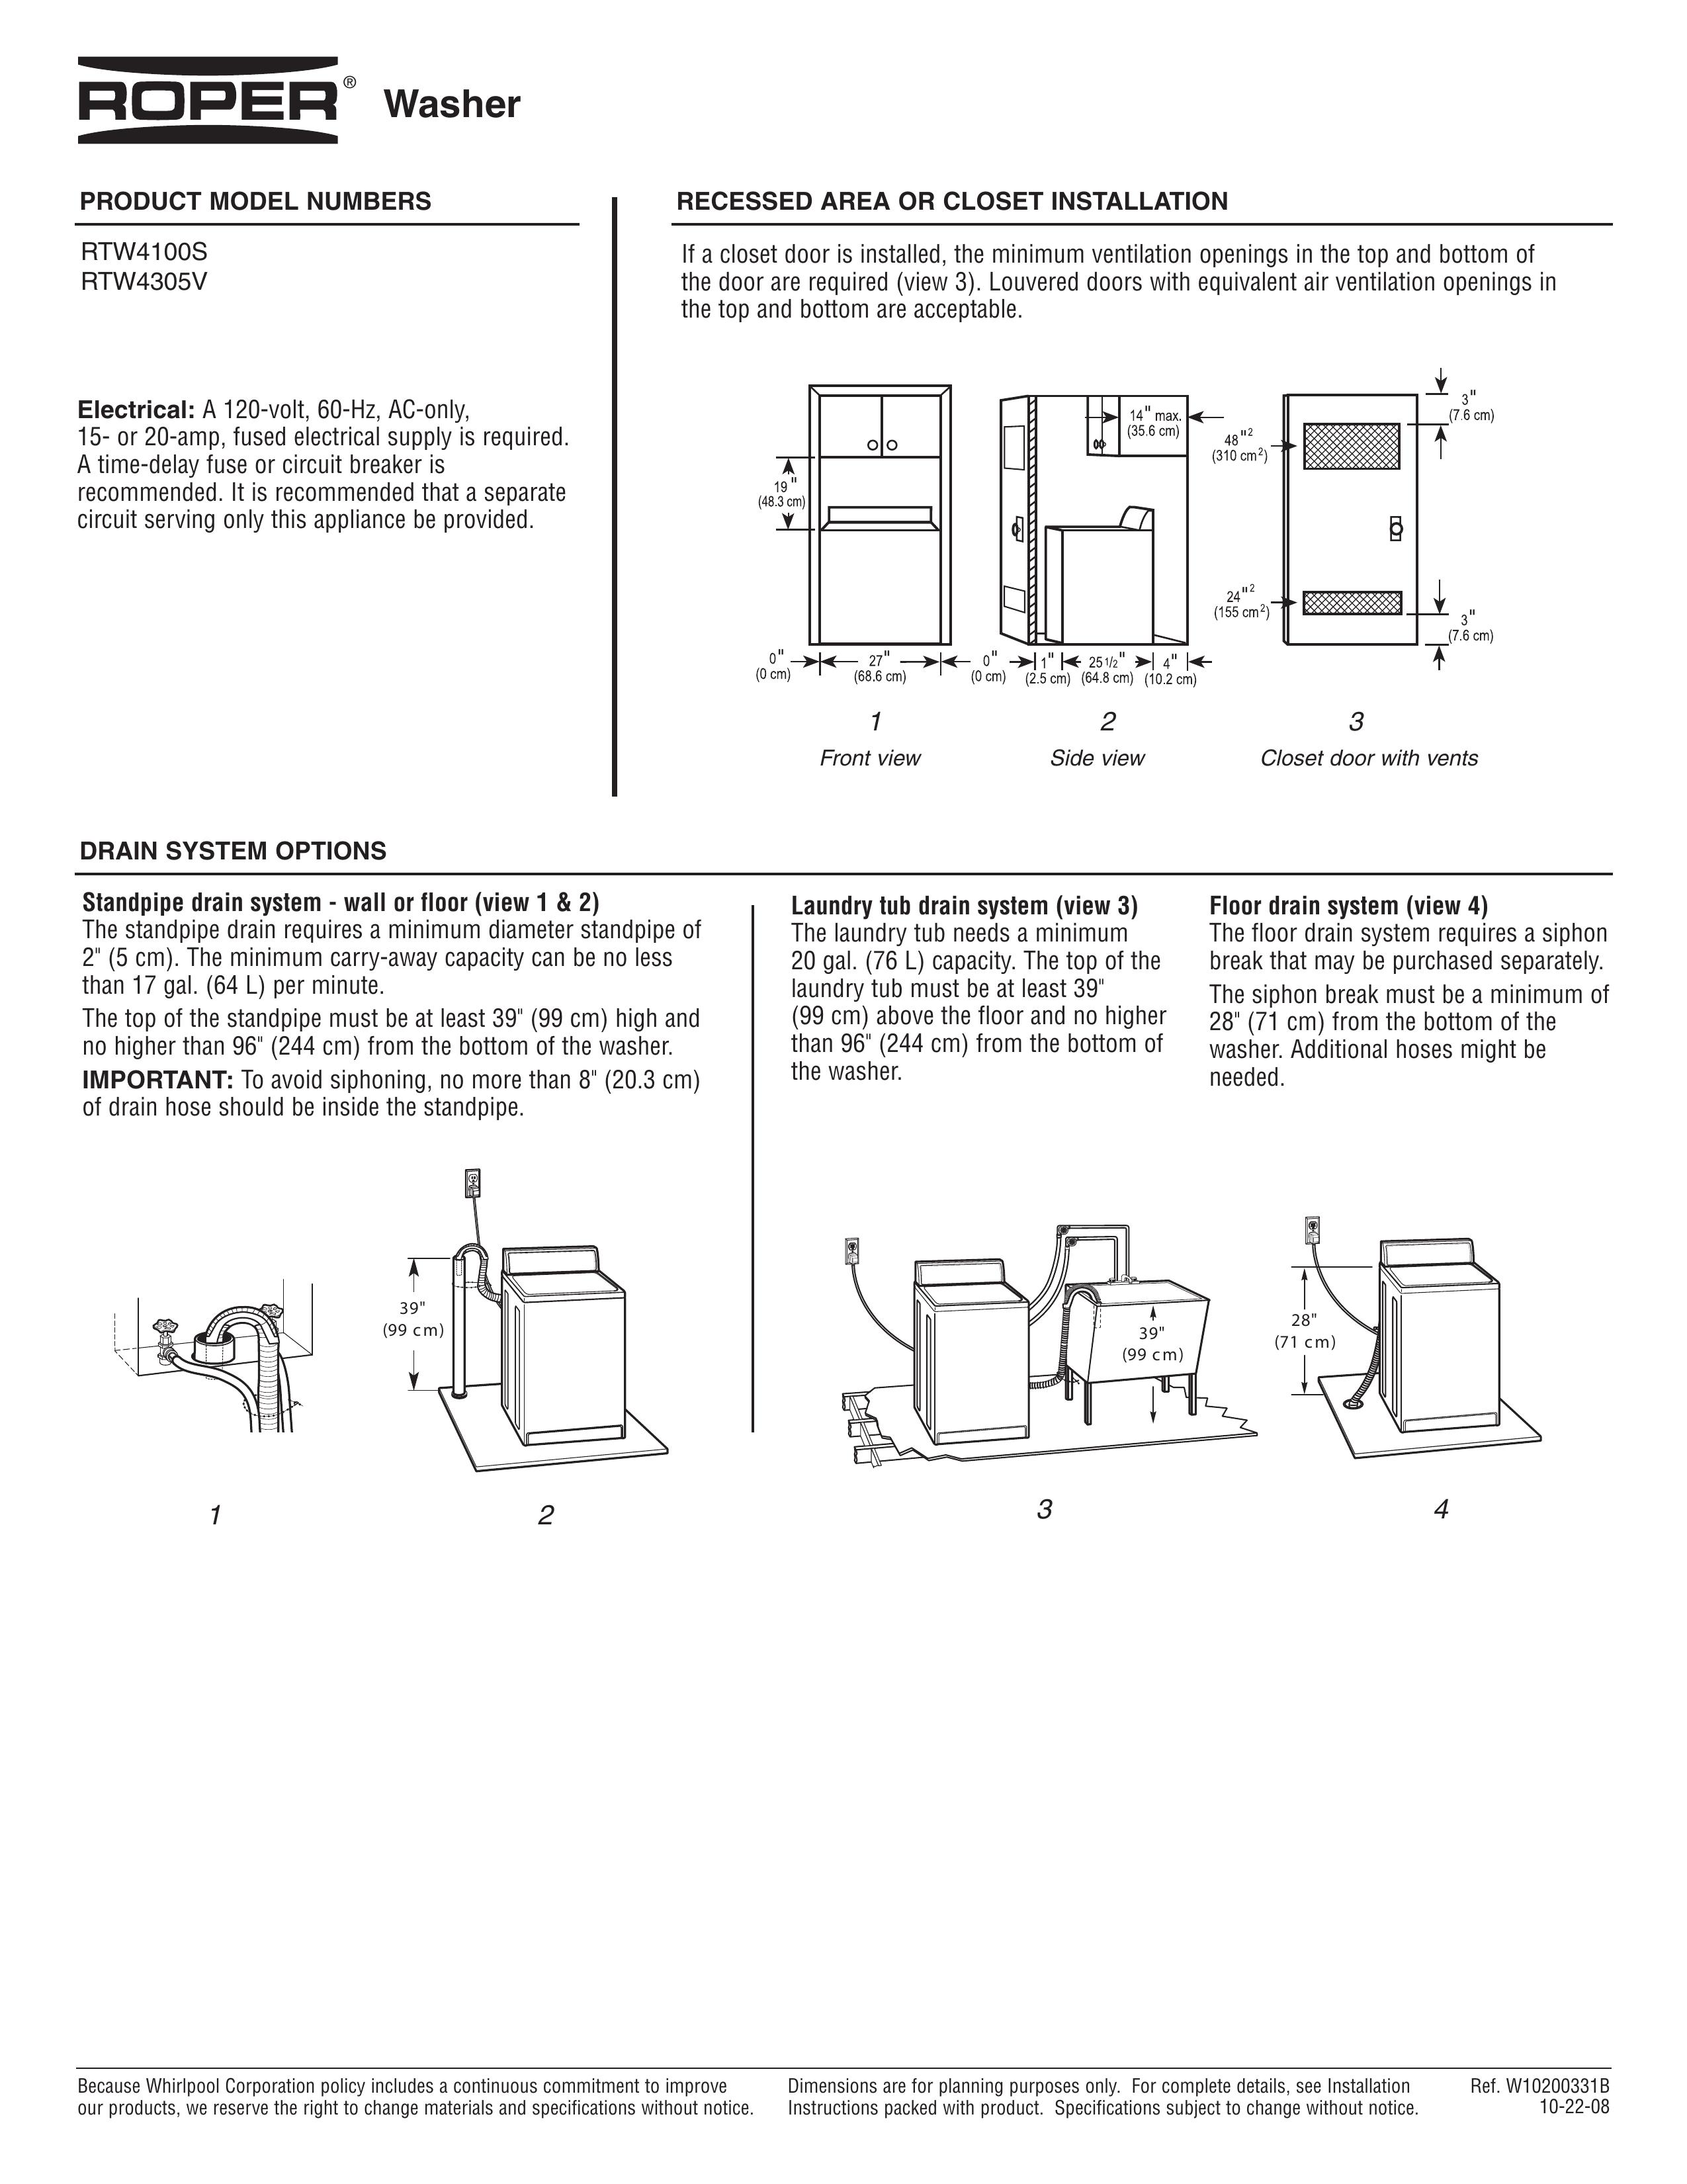 Roper RTW4305V Washer User Manual